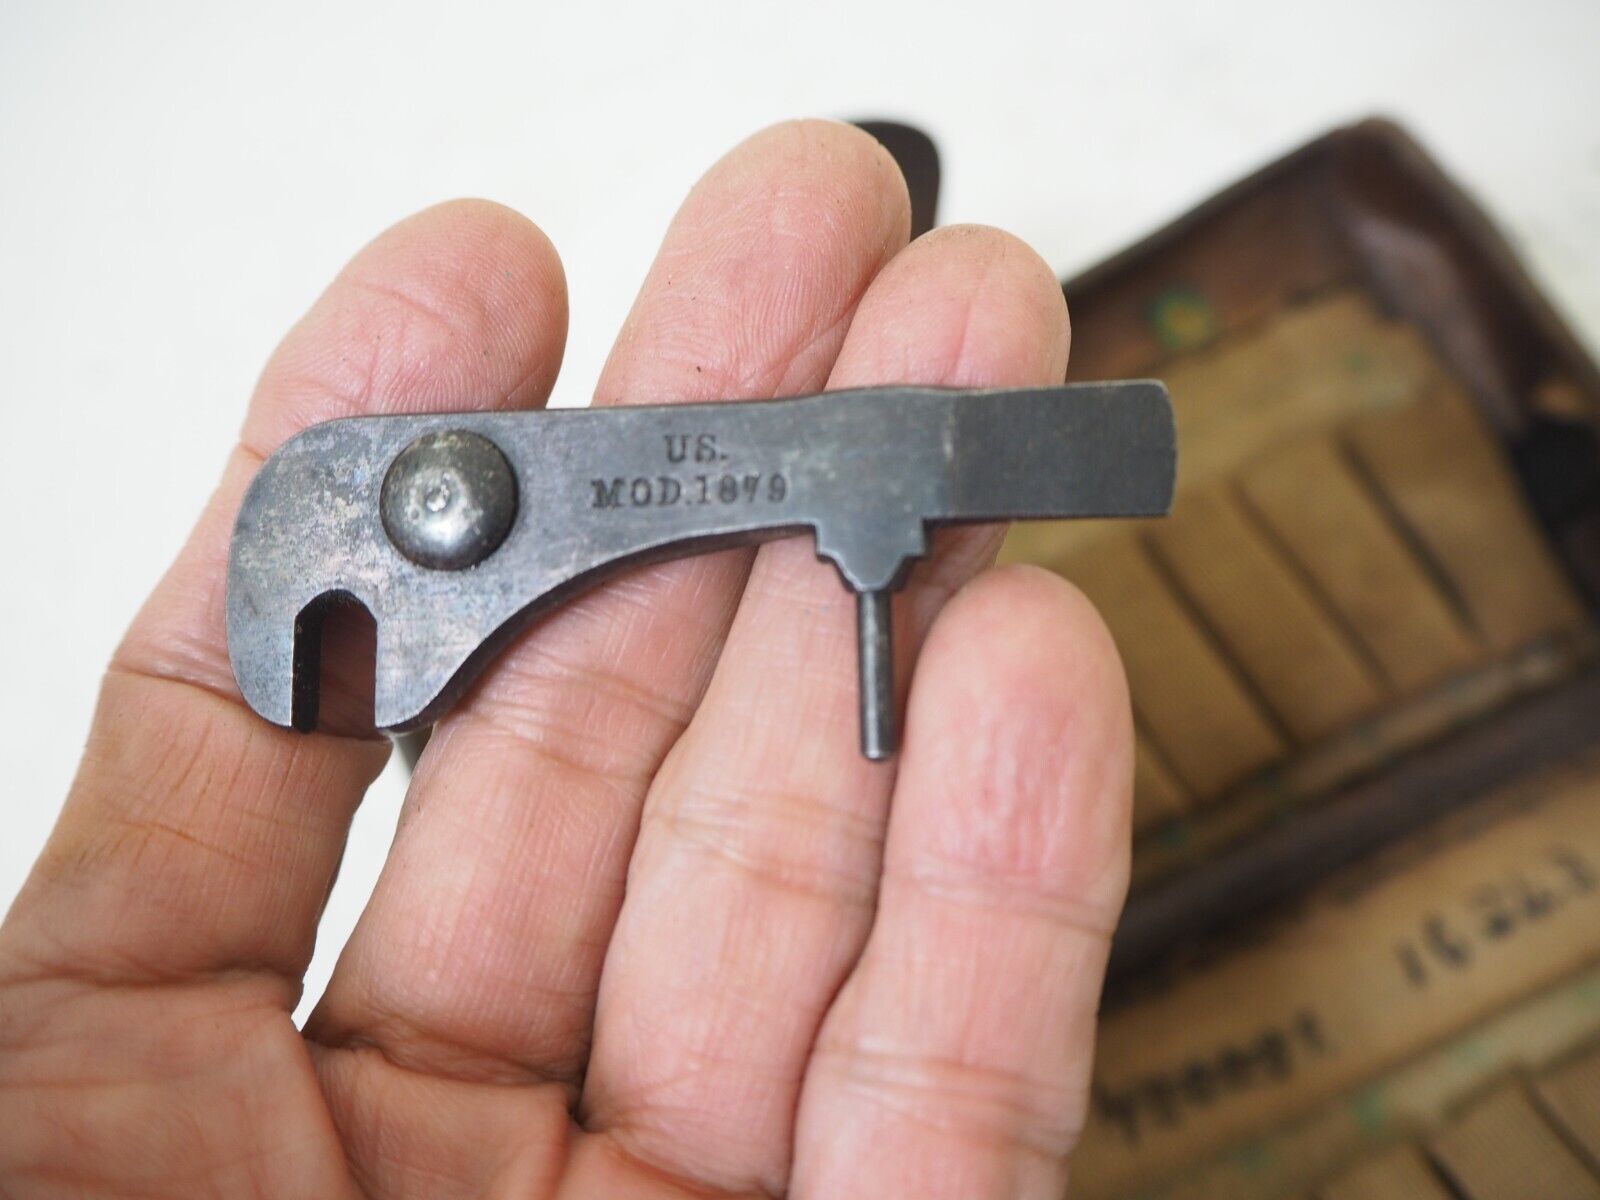 Original 1879 Tool for US Army 4570 Springfield